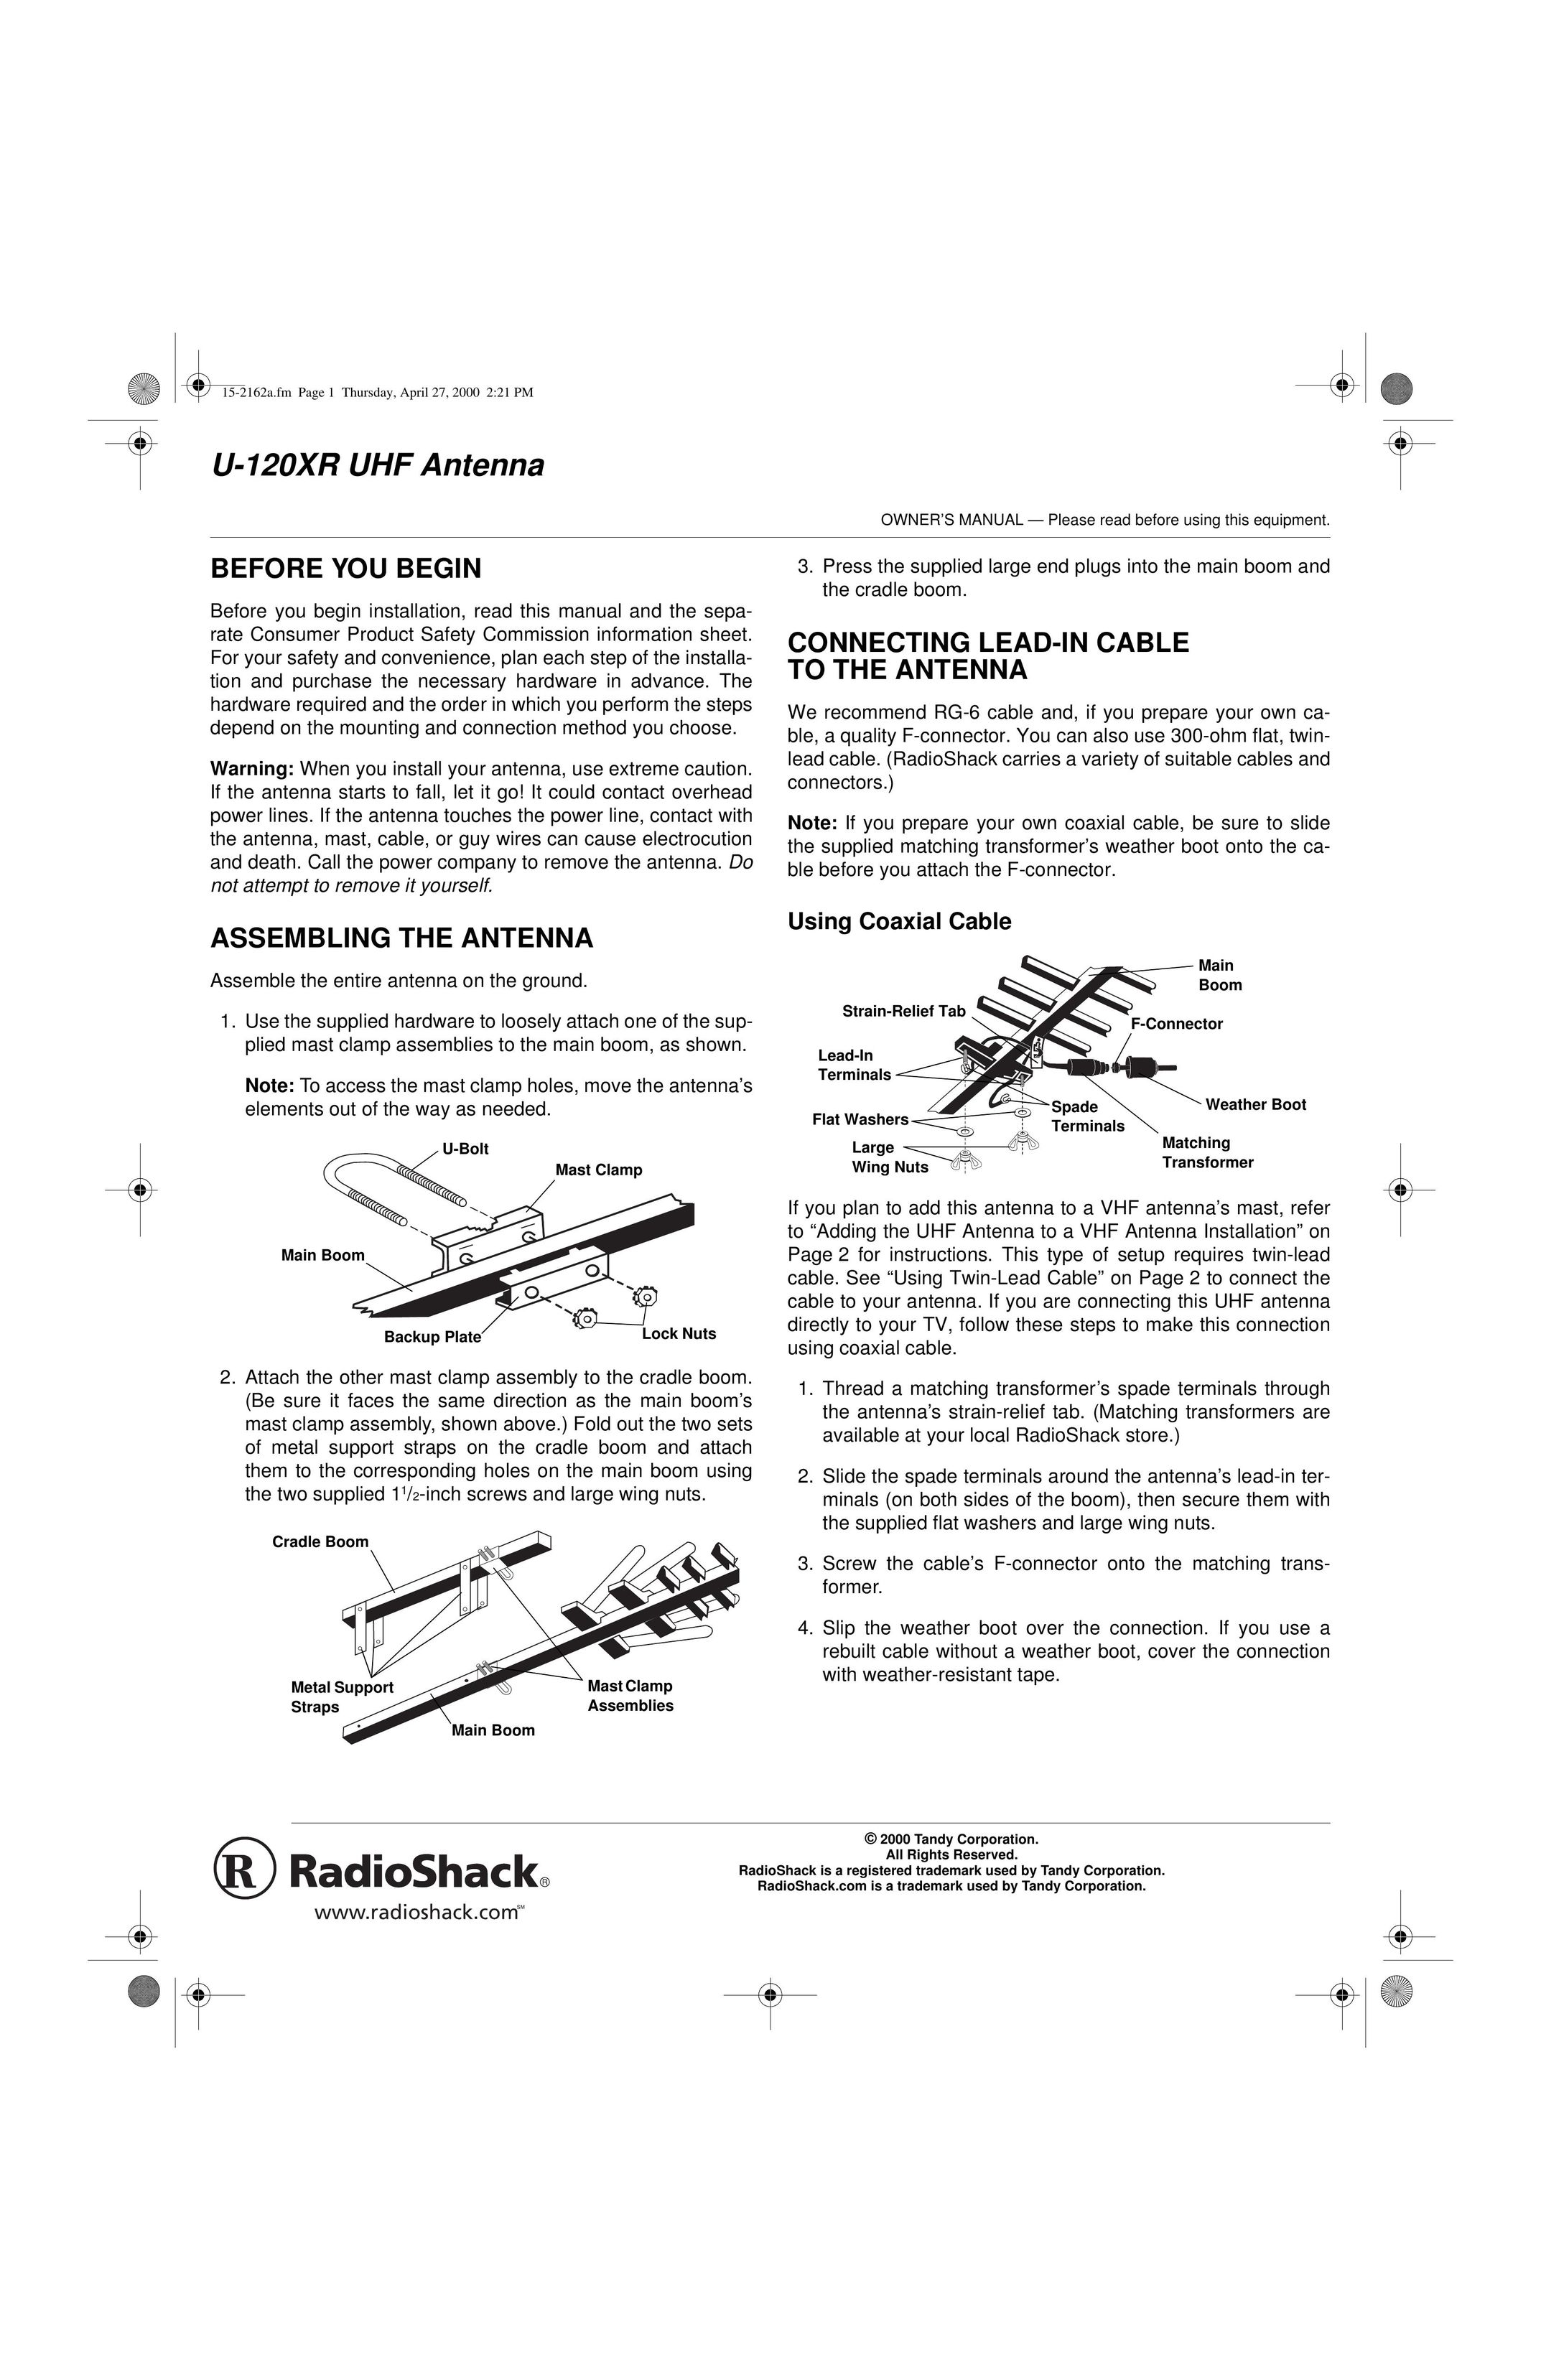 Radio Shack U-120XR TV Antenna User Manual